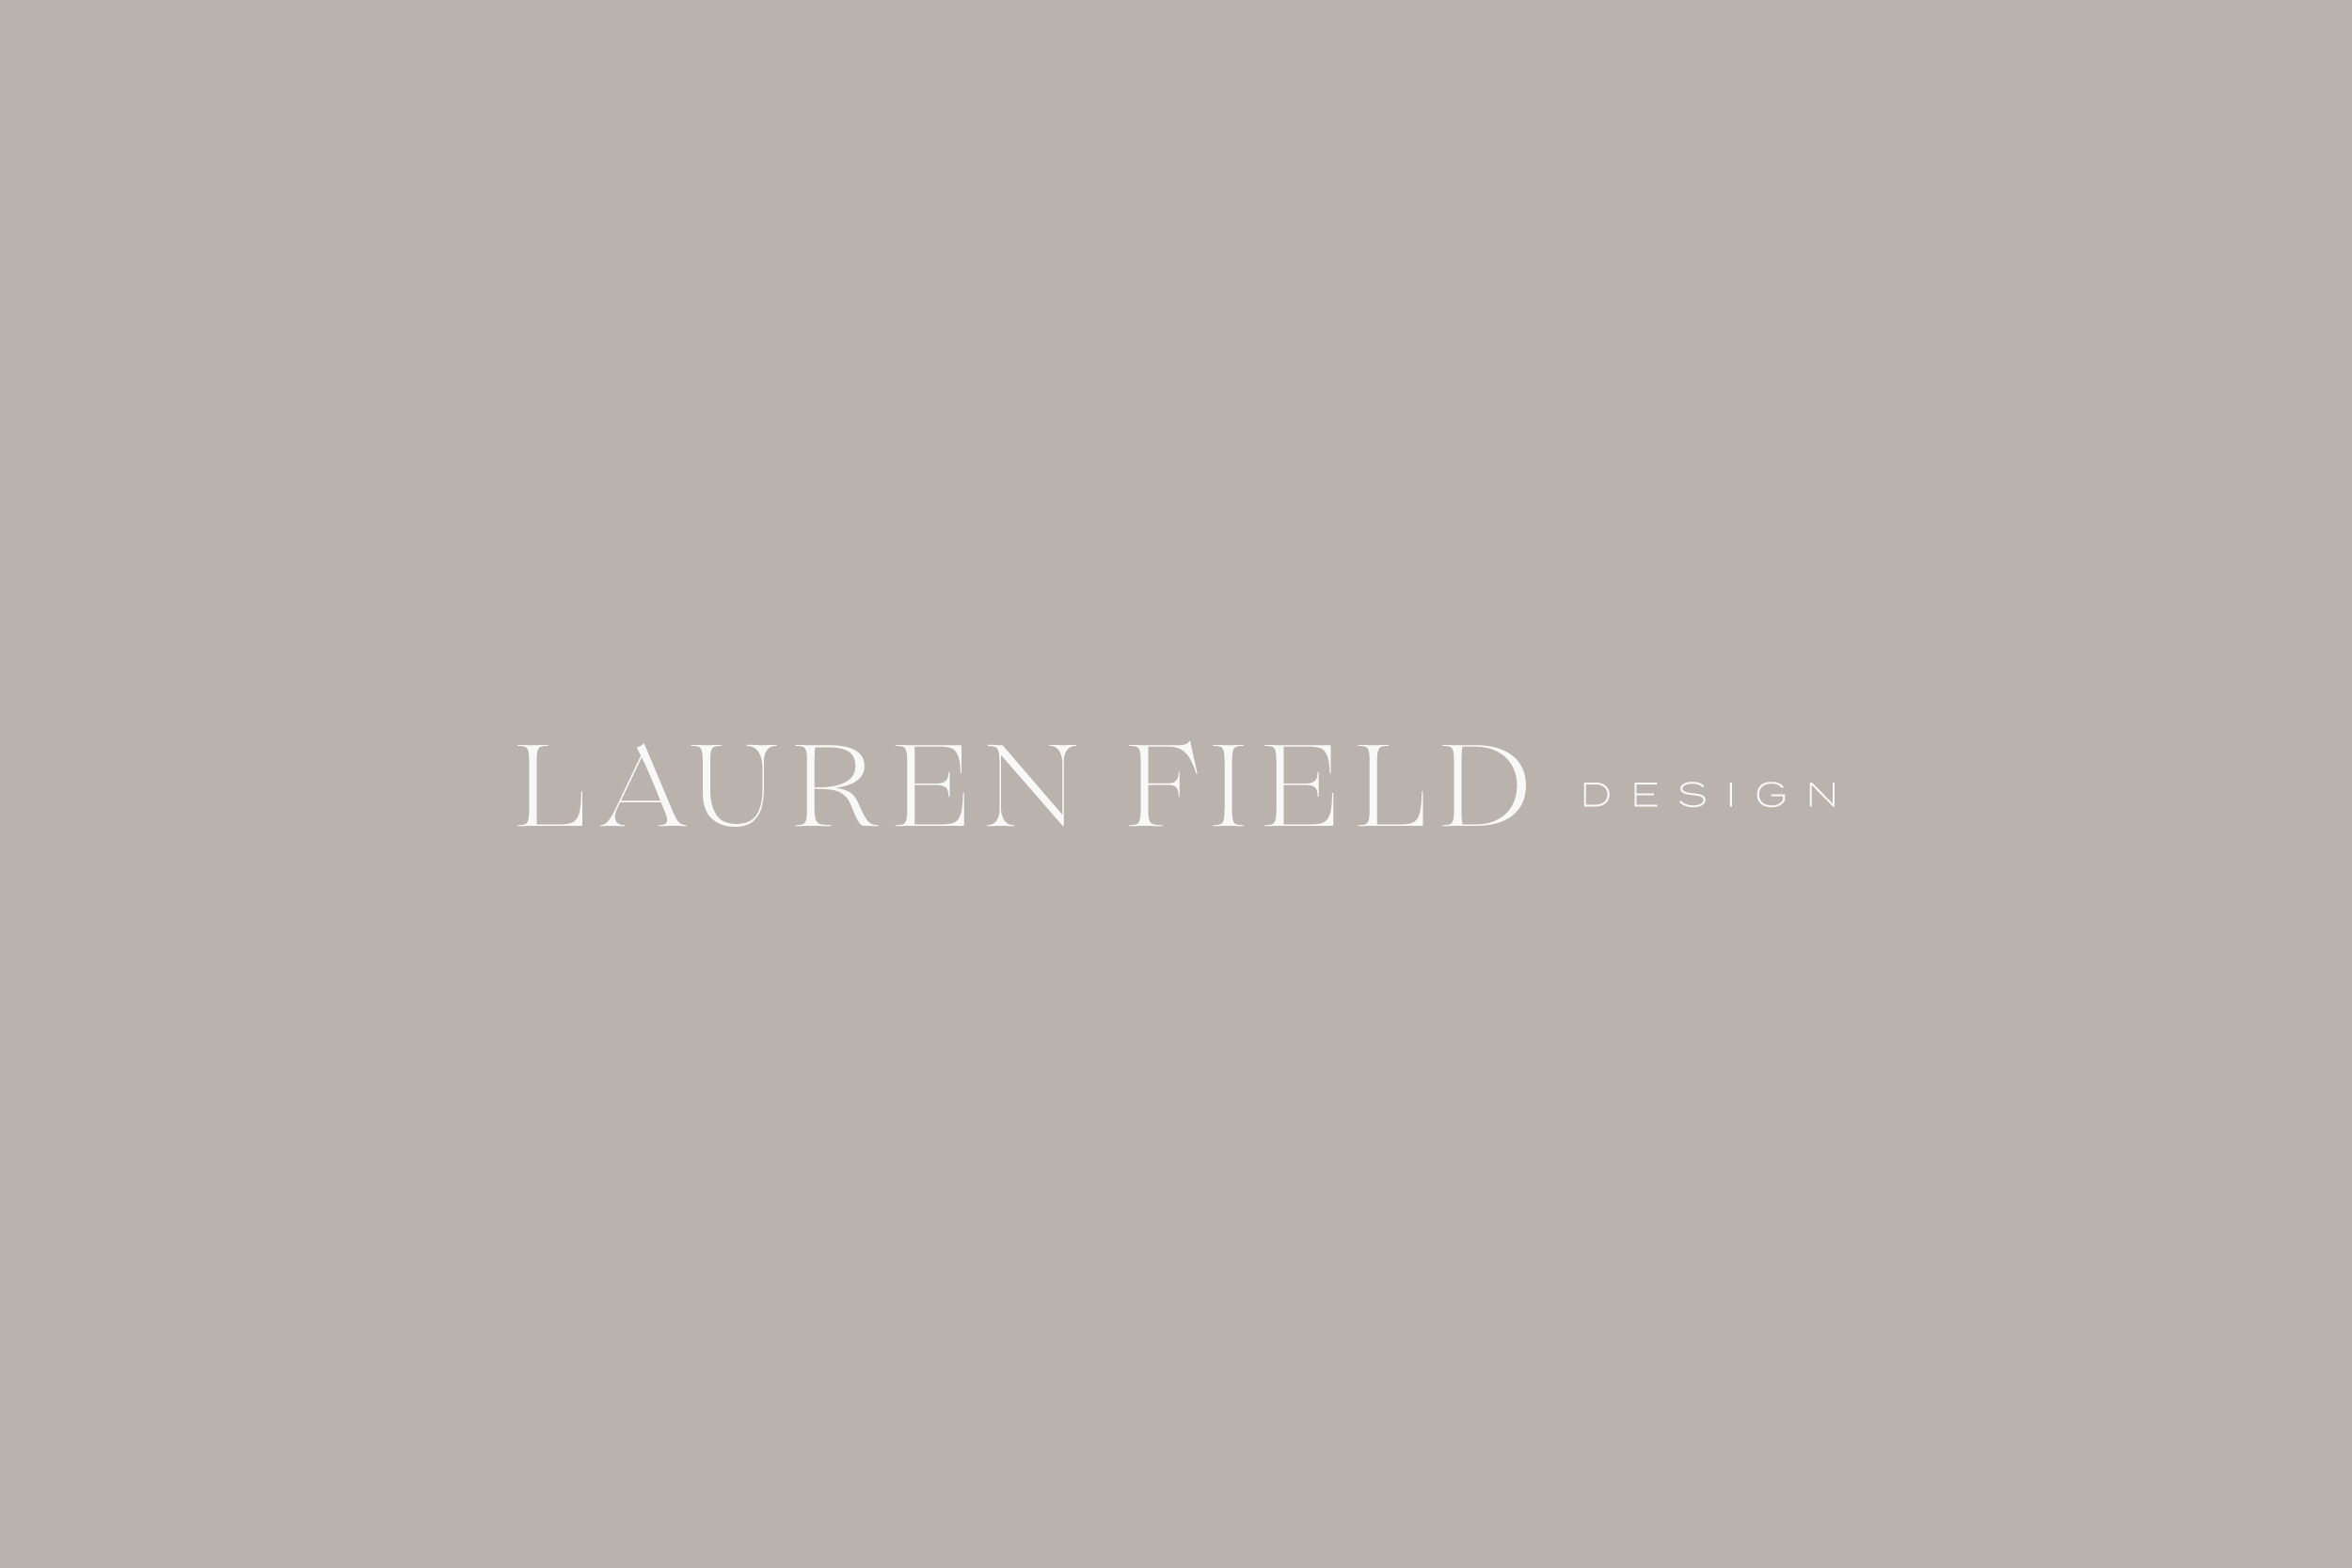 Elevated Custom Brand Design for Wedding Stylist Lauren Field Design | Sarah Ann Design